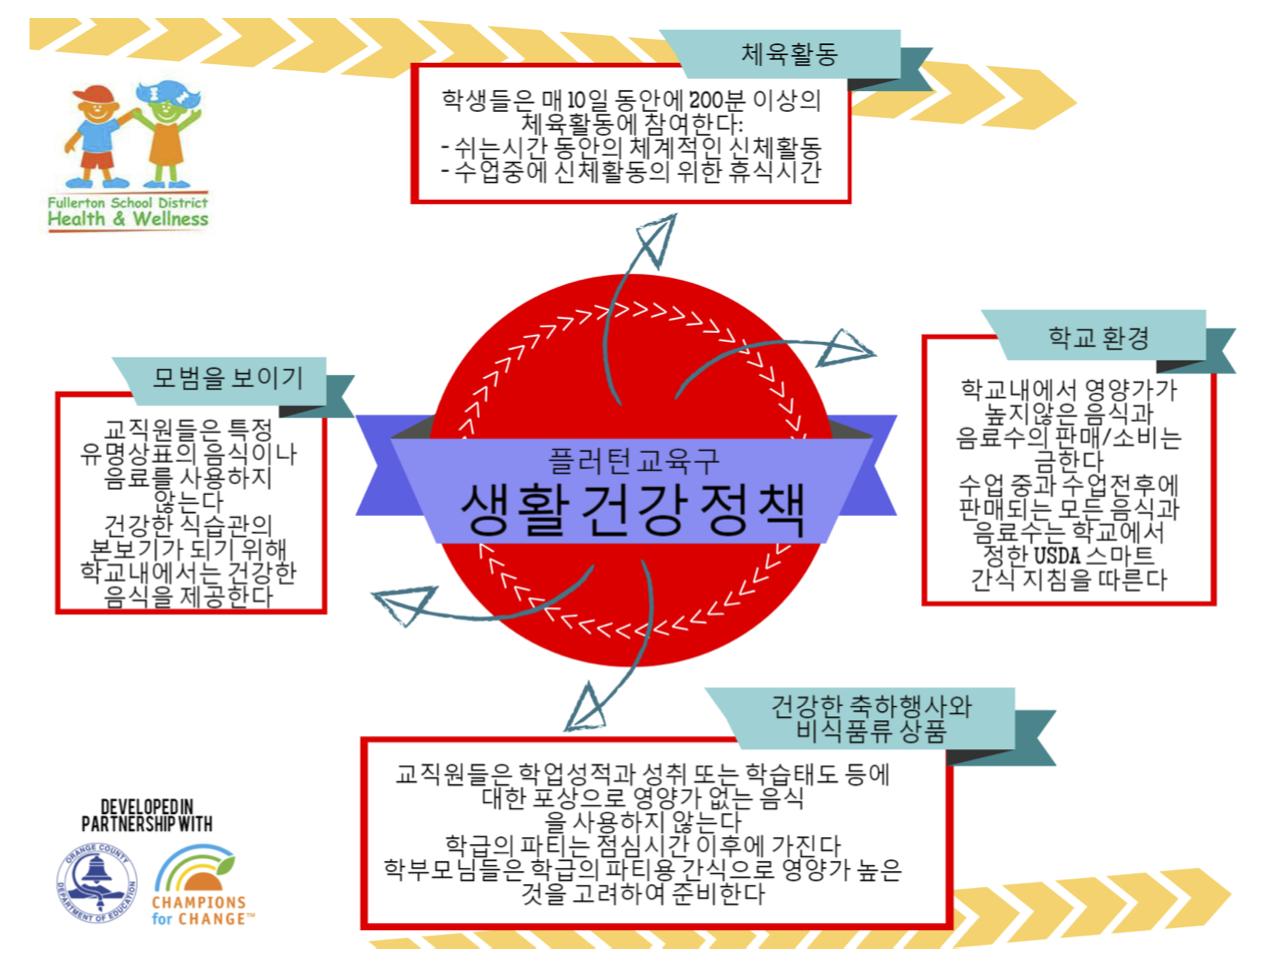 Korean Wellneess Policy